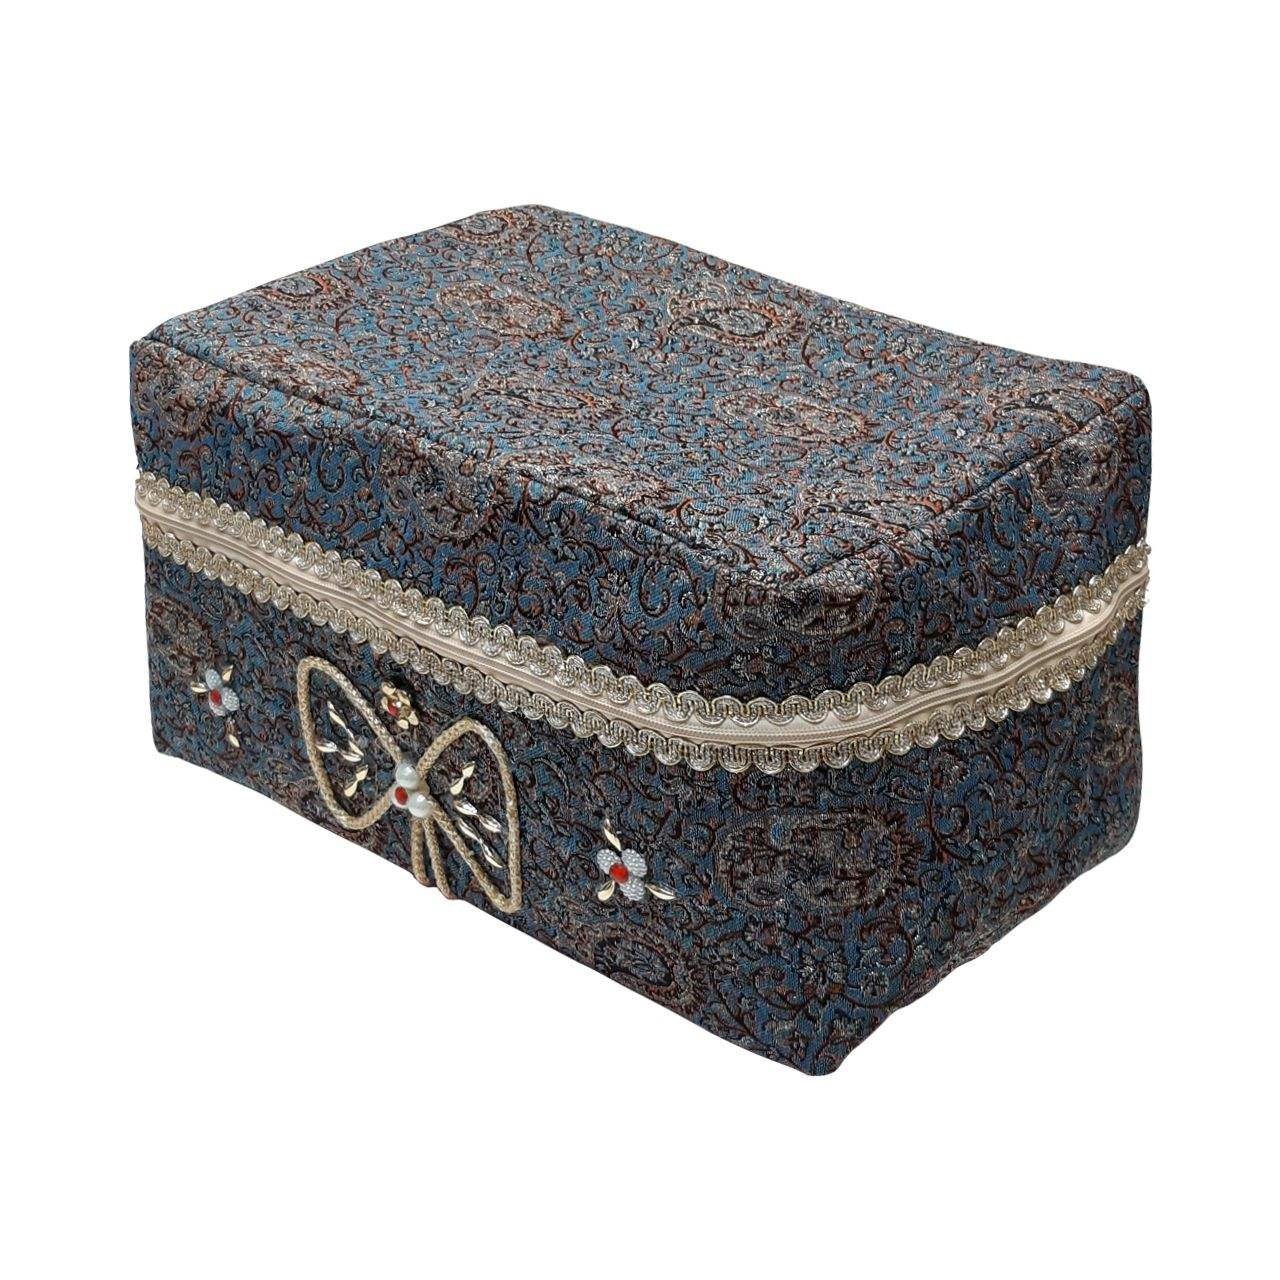 Handwoven Termeh Jewelry box code 9,Handwoven Termeh Jewelry box,termeh handwoven,termeh handwoven price